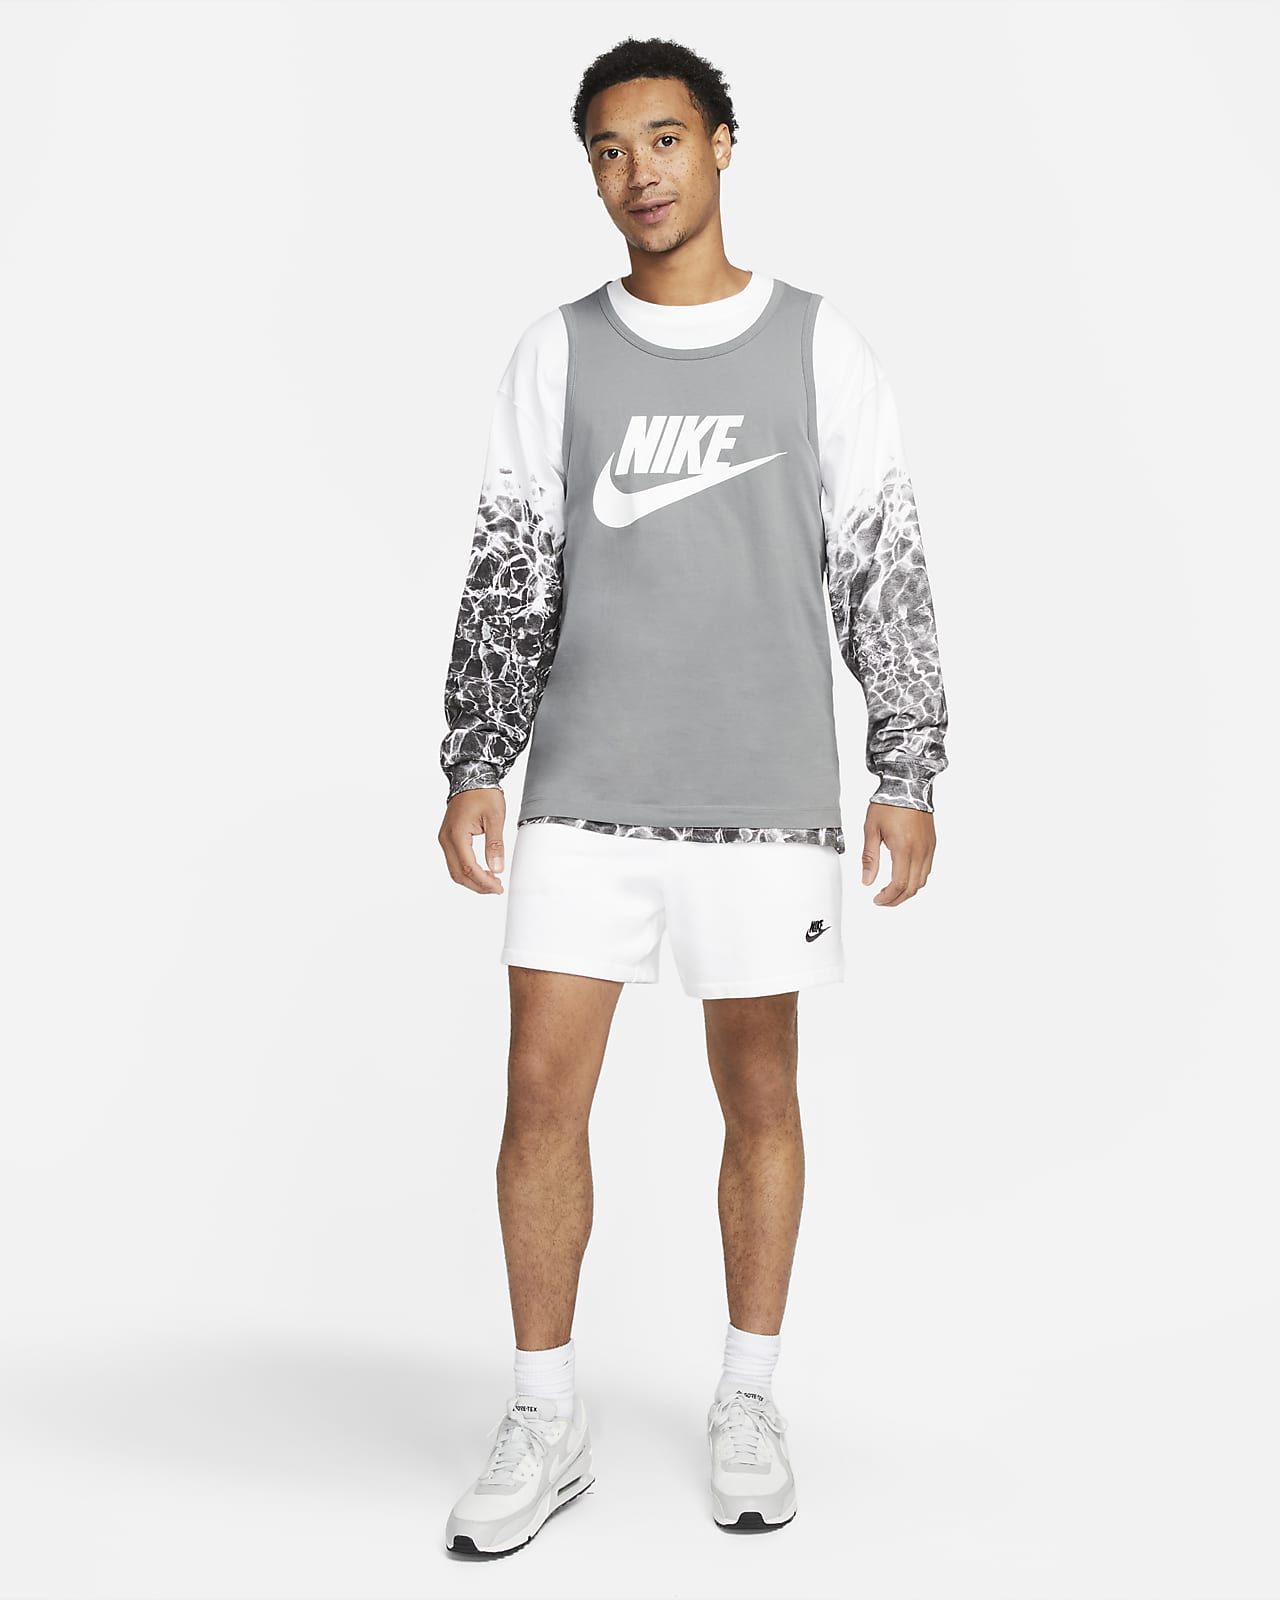 Nike Sportswear Men's Tank-Grey/Black Large